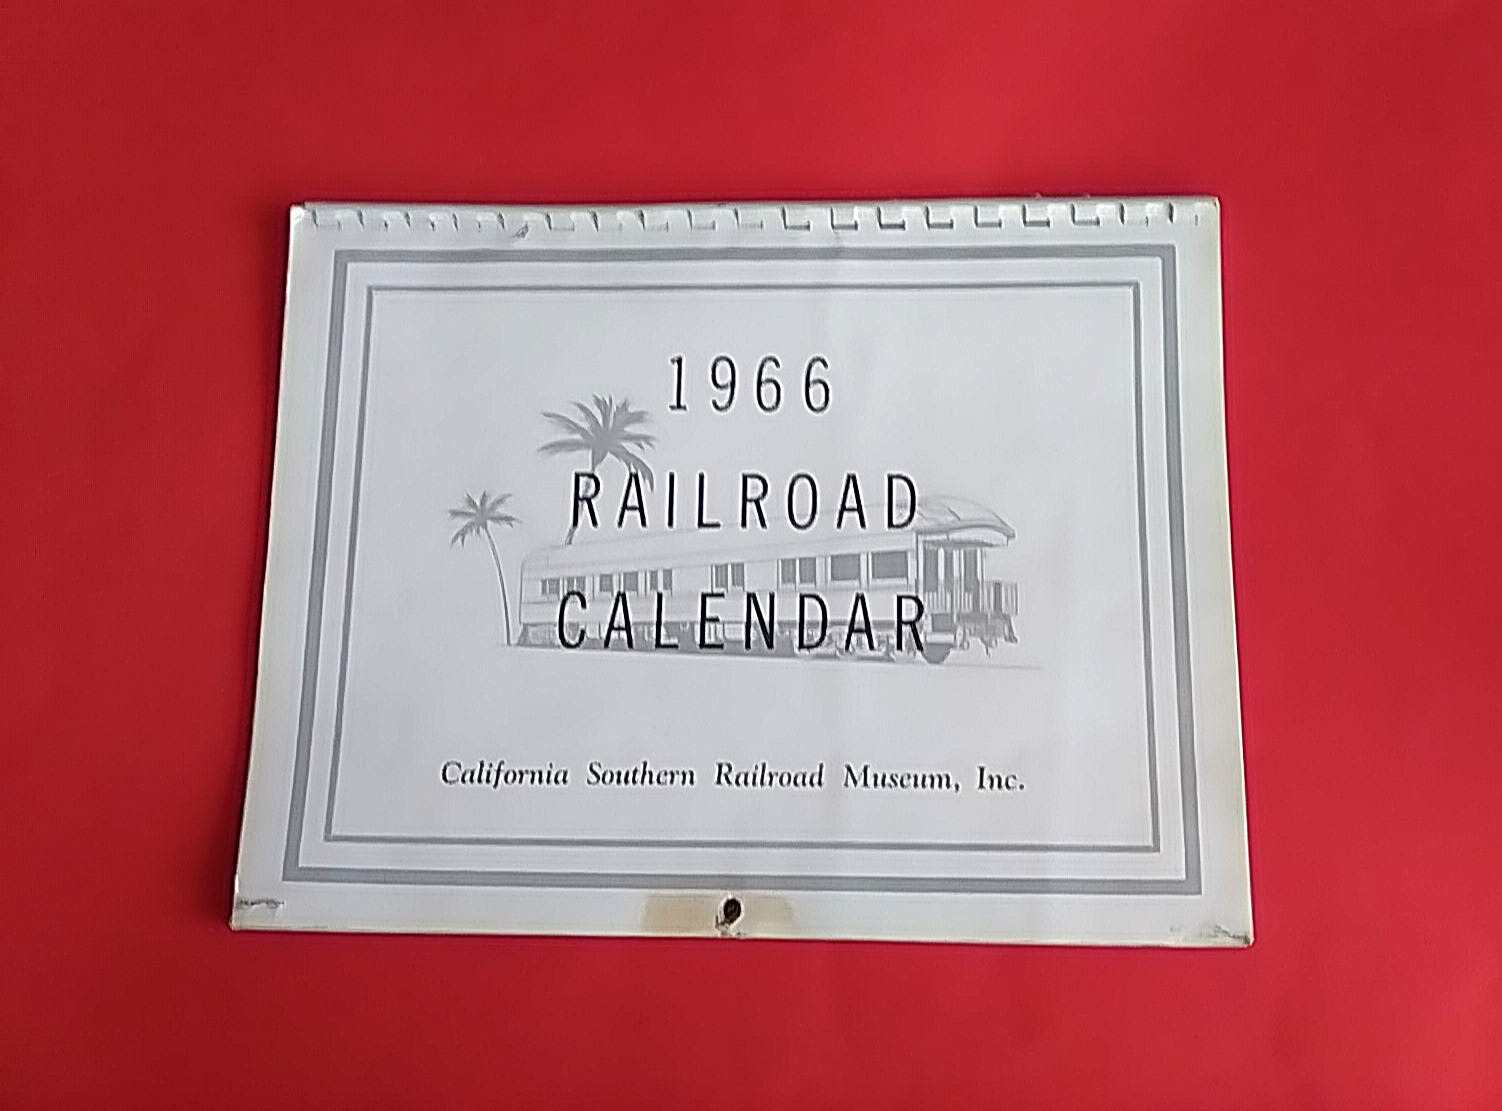 1966 vintage train calendar with extraordinary railroad photographic art